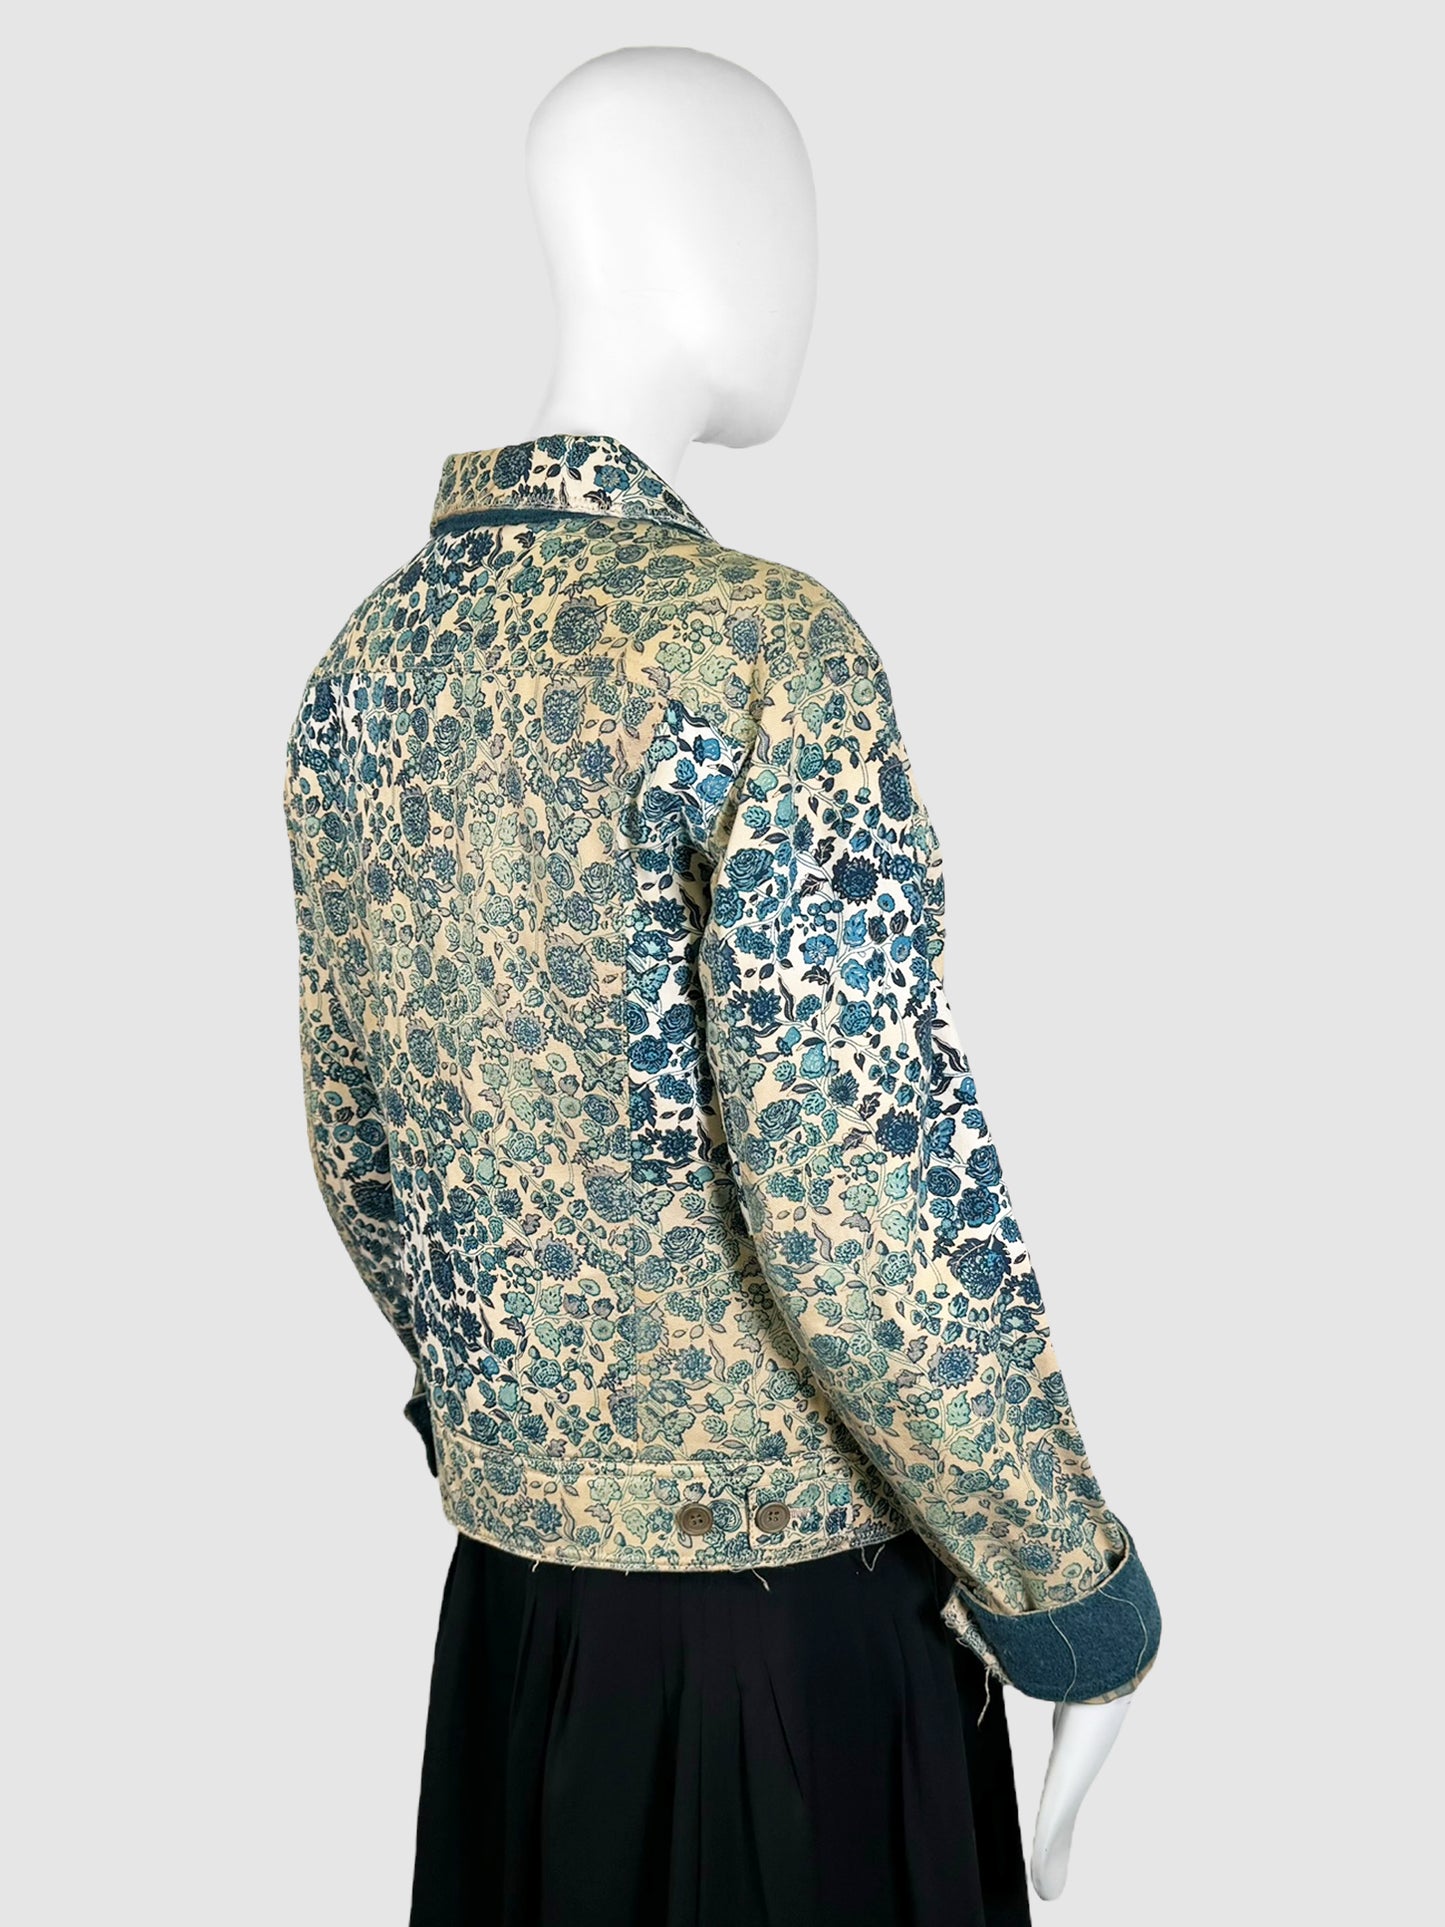 Issey Miyake Floral Print Jacket - Size M